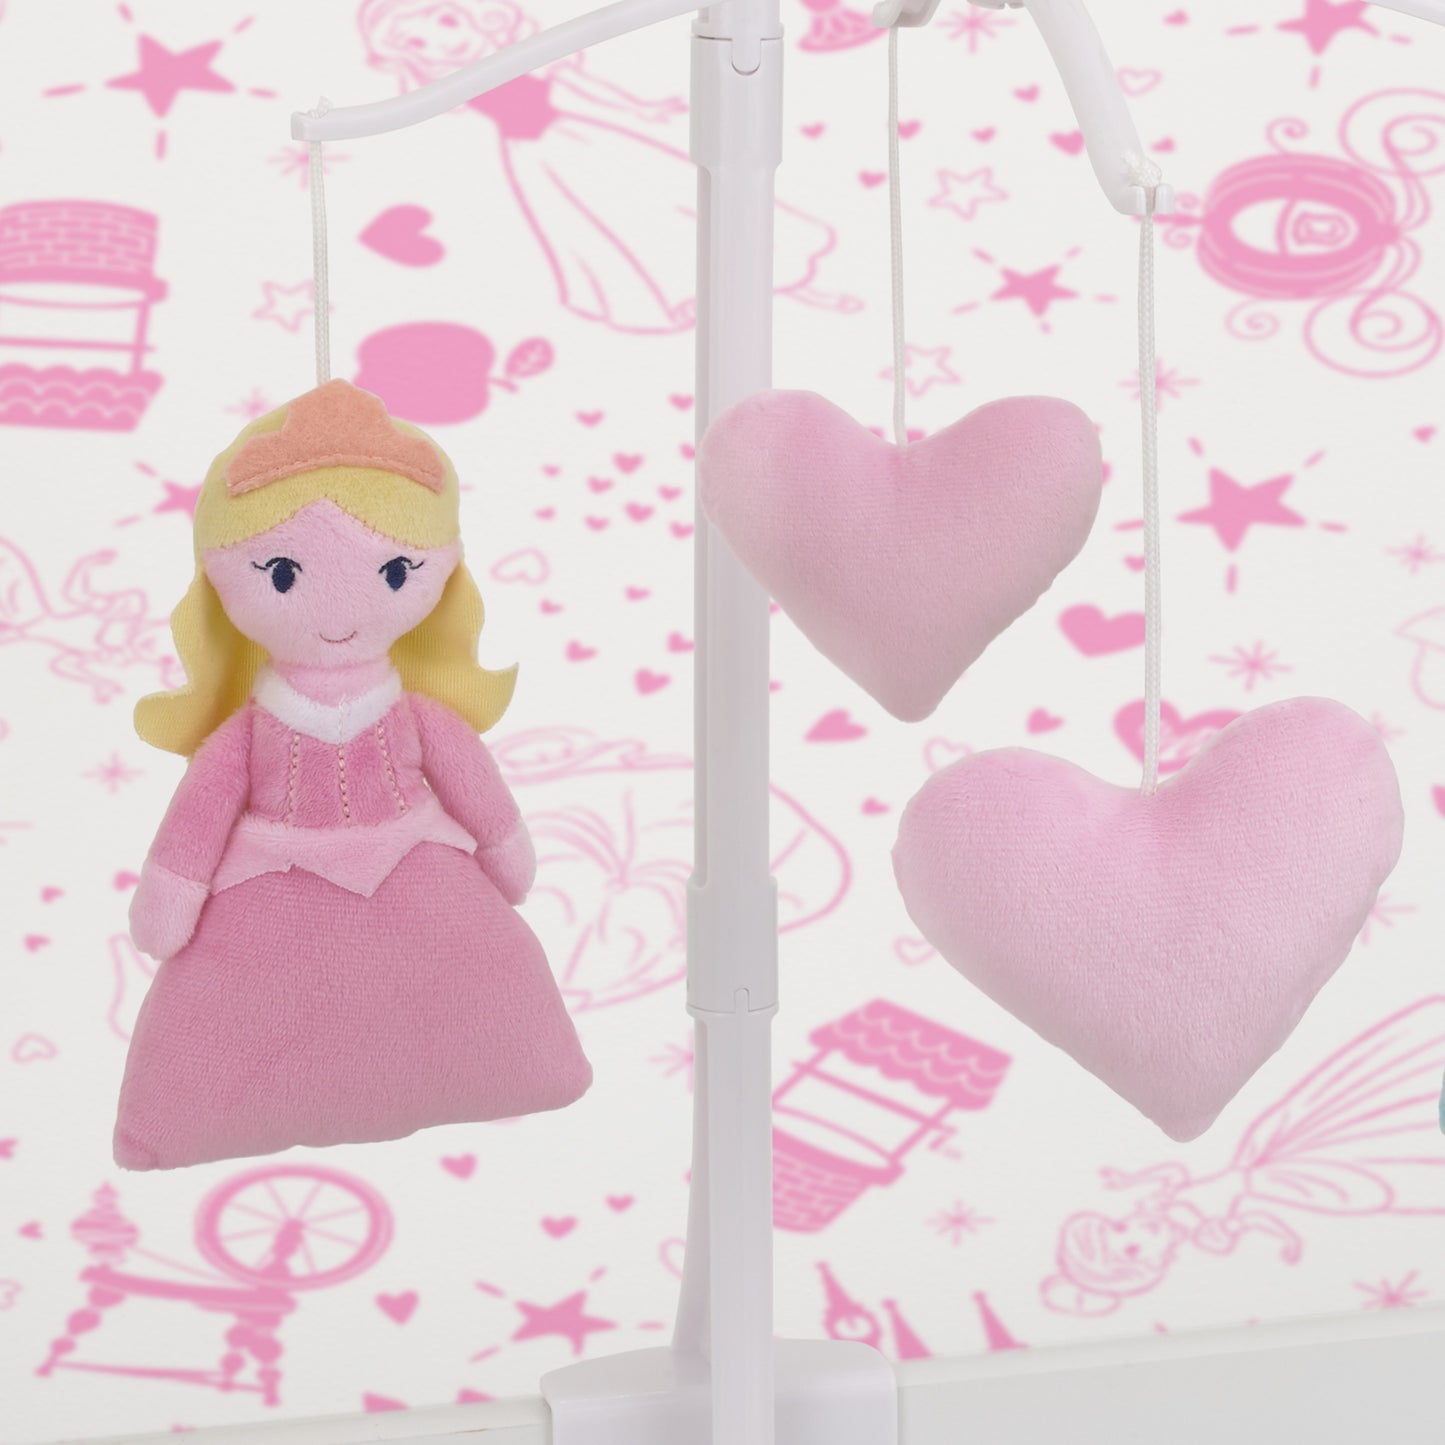 Disney Princess - Dare to Dream Pink Hearts Musical Mobile